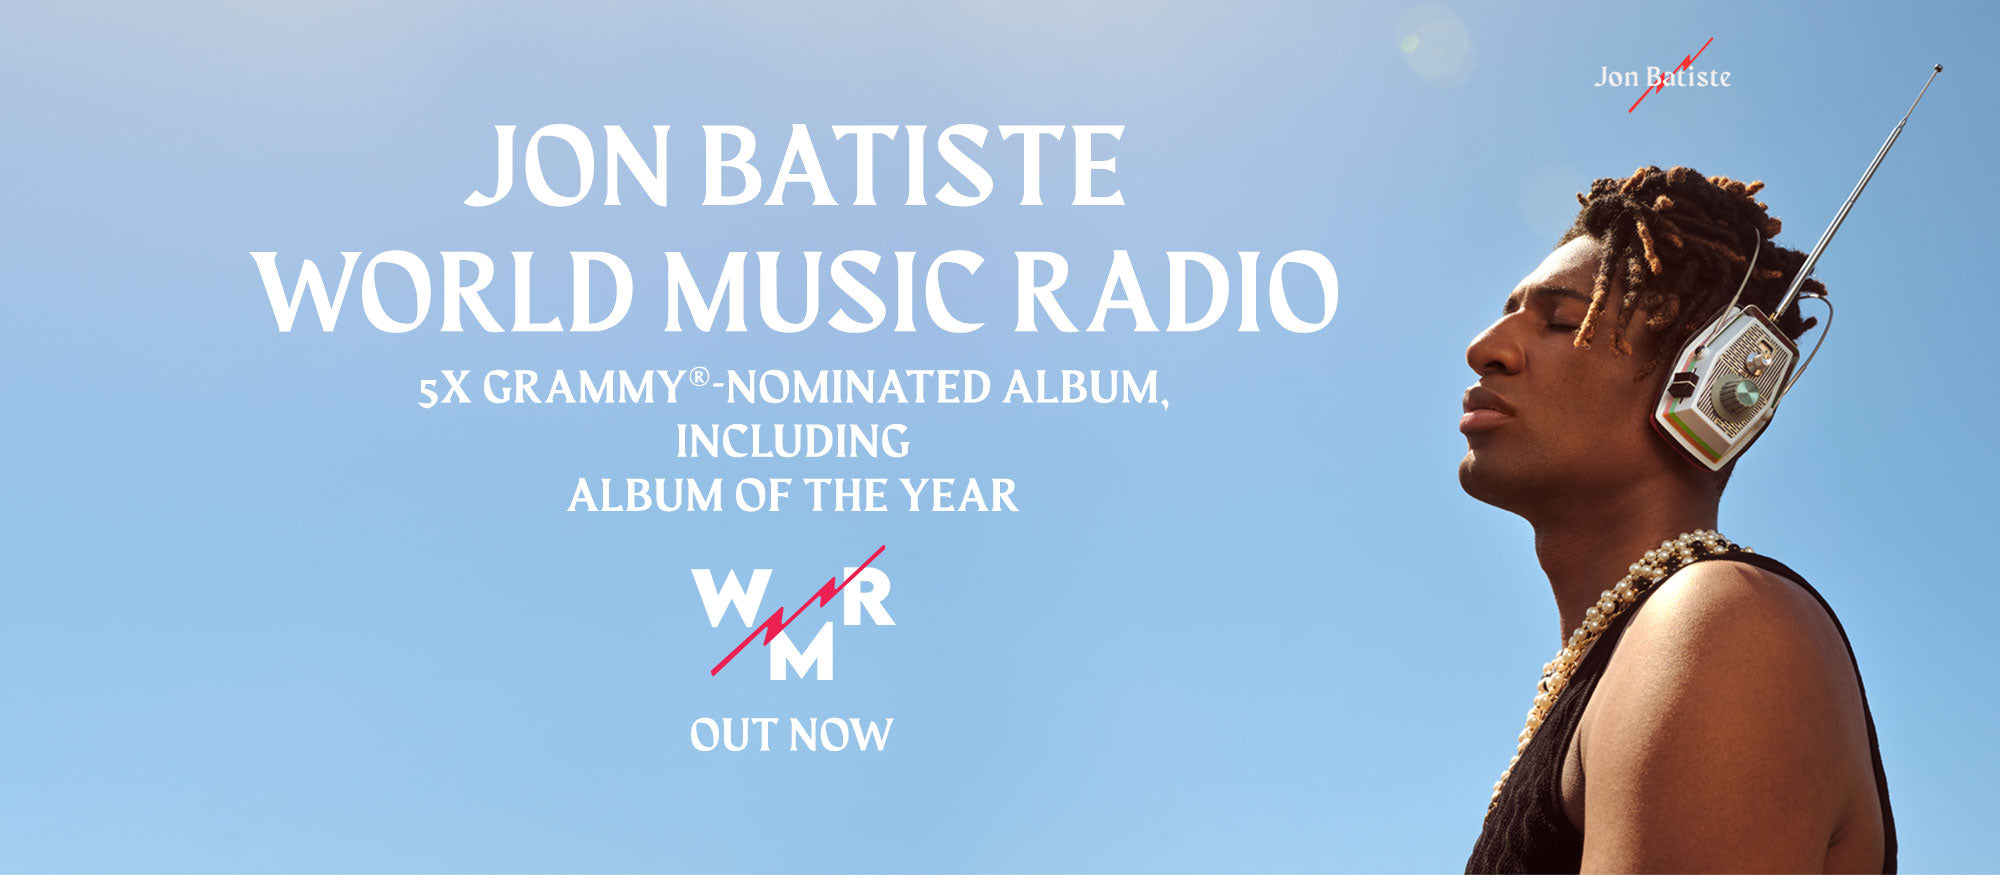 WORLD MUSIC RADIO Vinyl Record - Jon Batiste